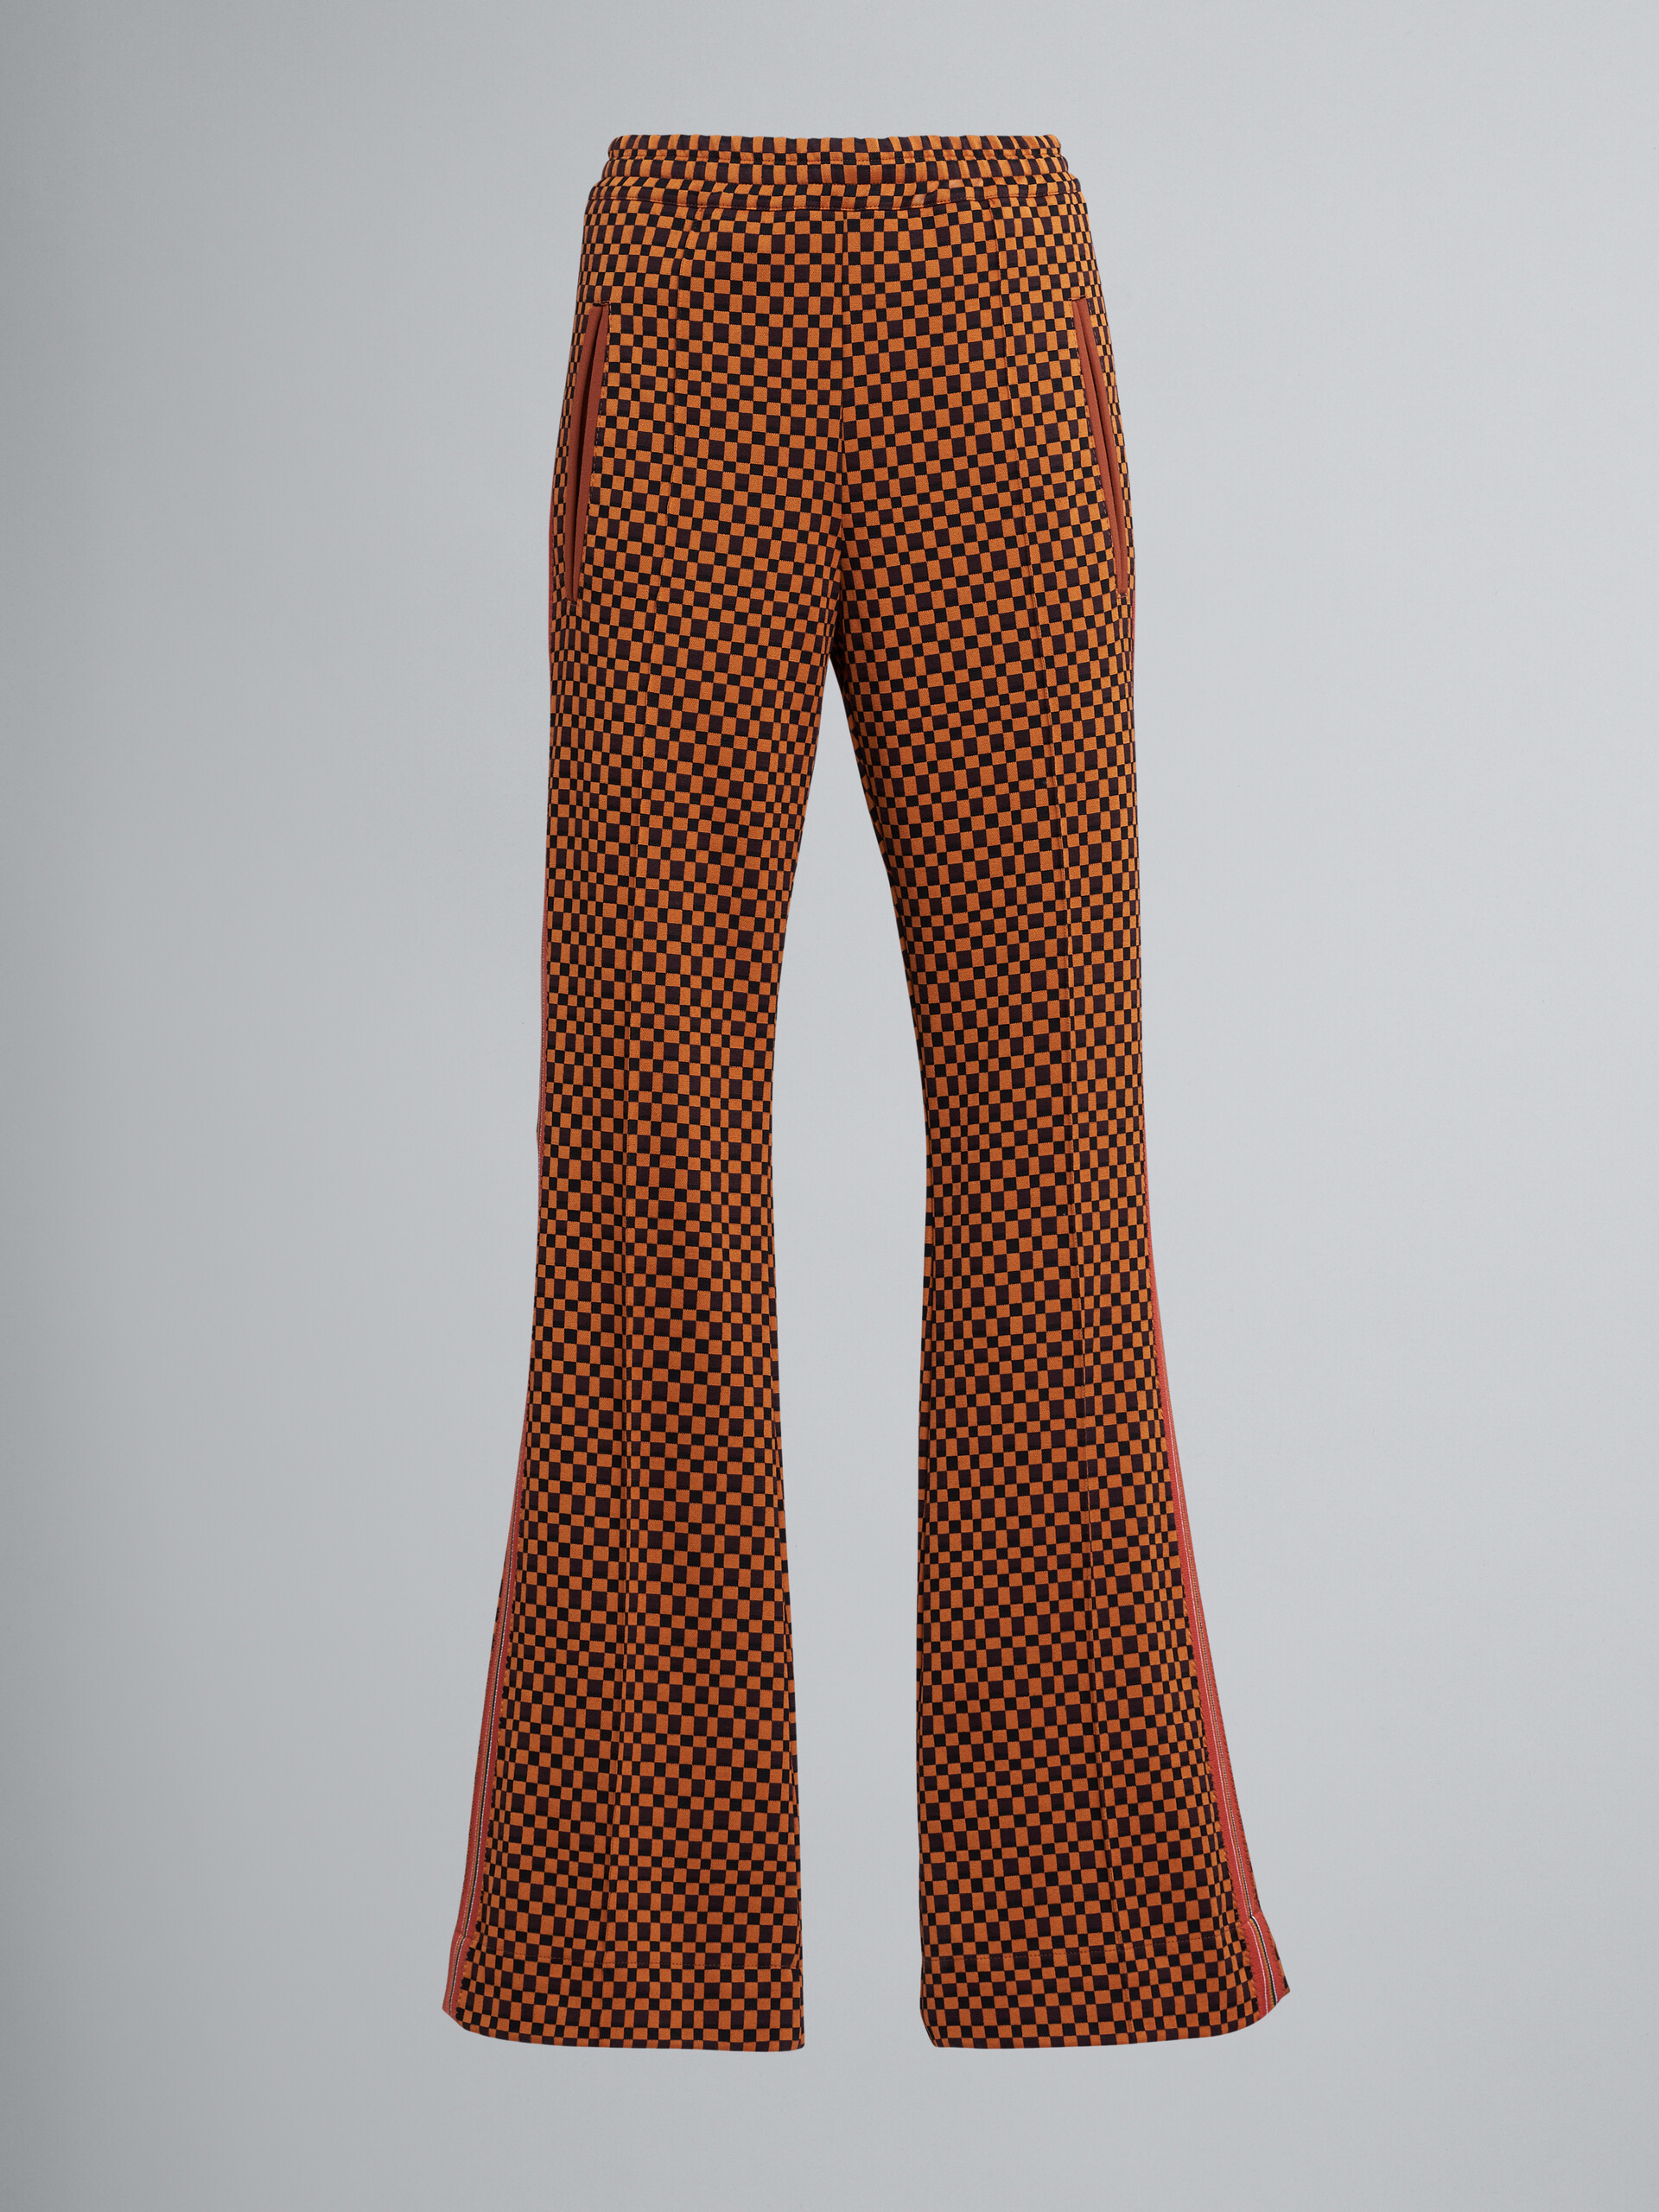 Jacquard jersey long trousers - Pants - Image 1